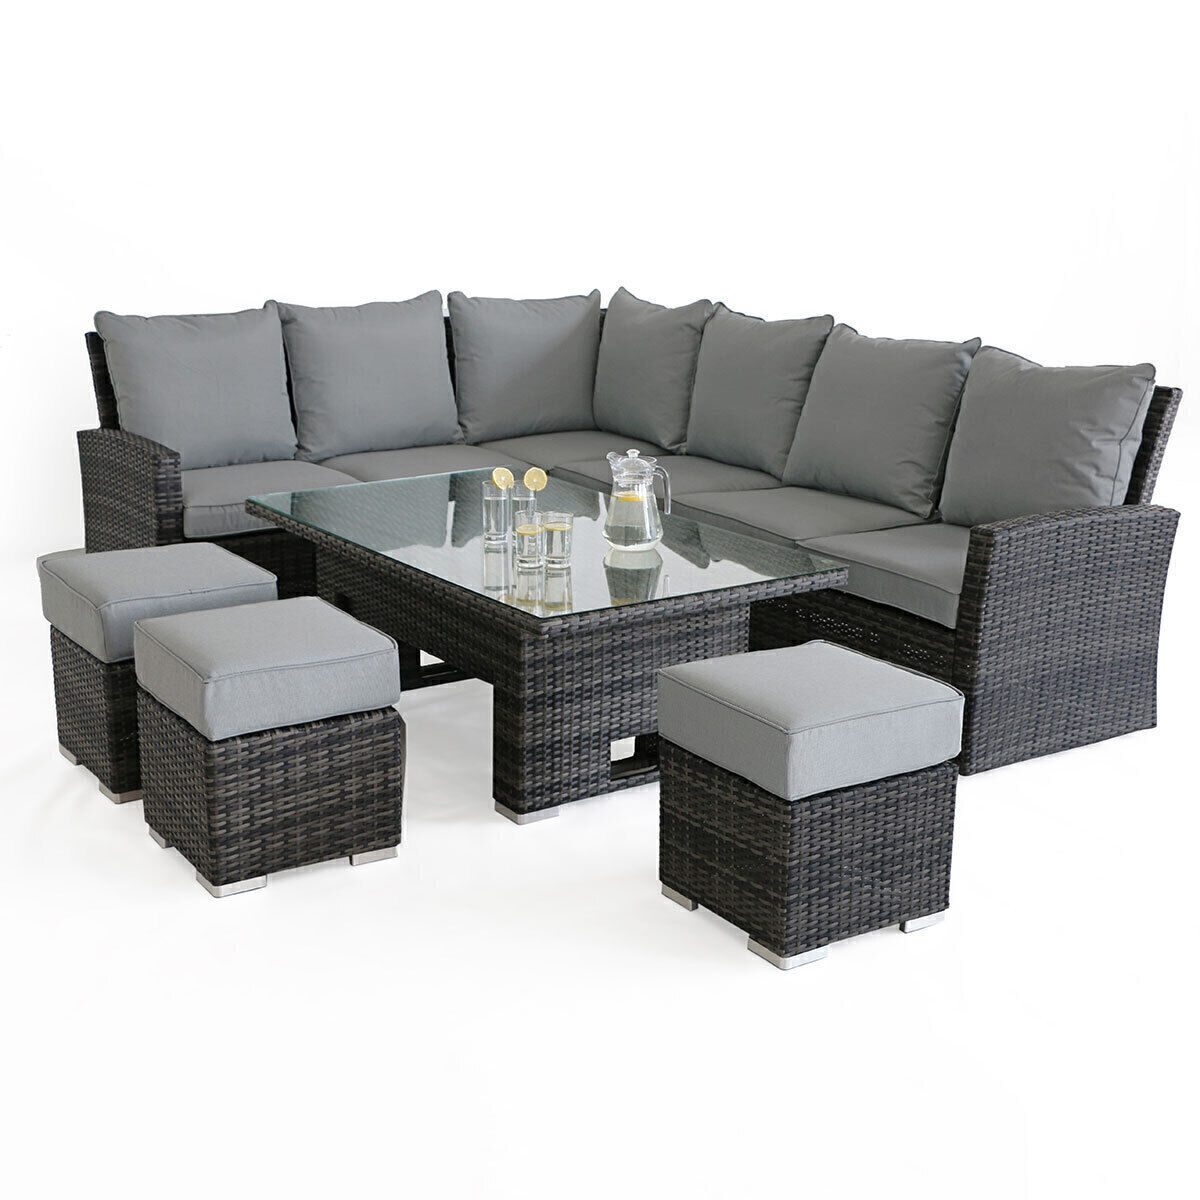 Maze - Kingston Corner Rattan Sofa Dining Set with Rising Table - Grey product image